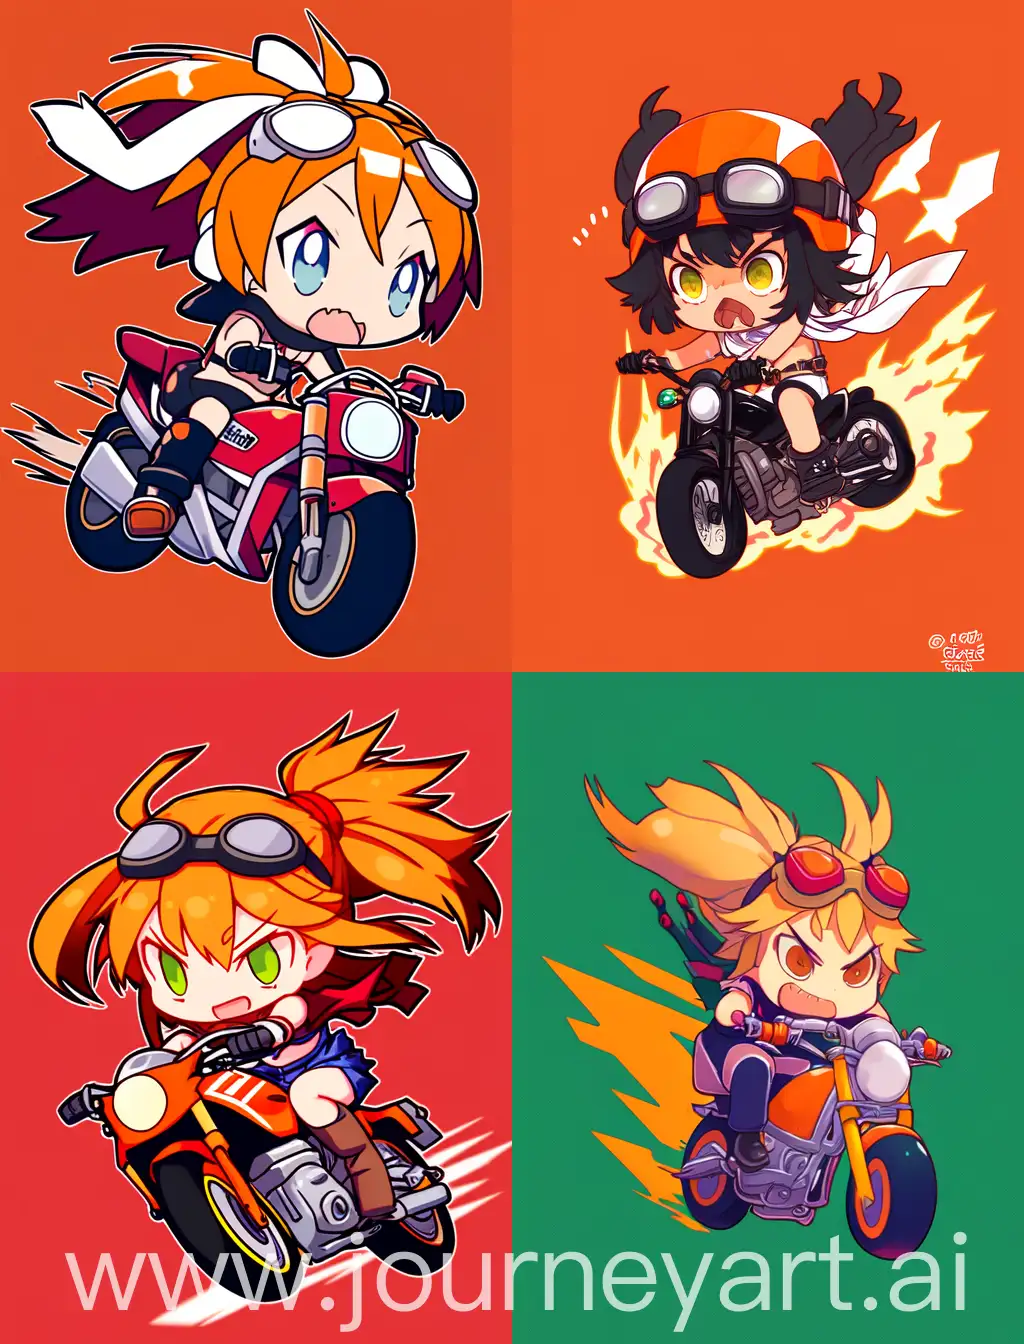 Fierce-Chibi-Anime-Girl-Riding-Motorcycle-in-Vibrant-Cartoon-Style